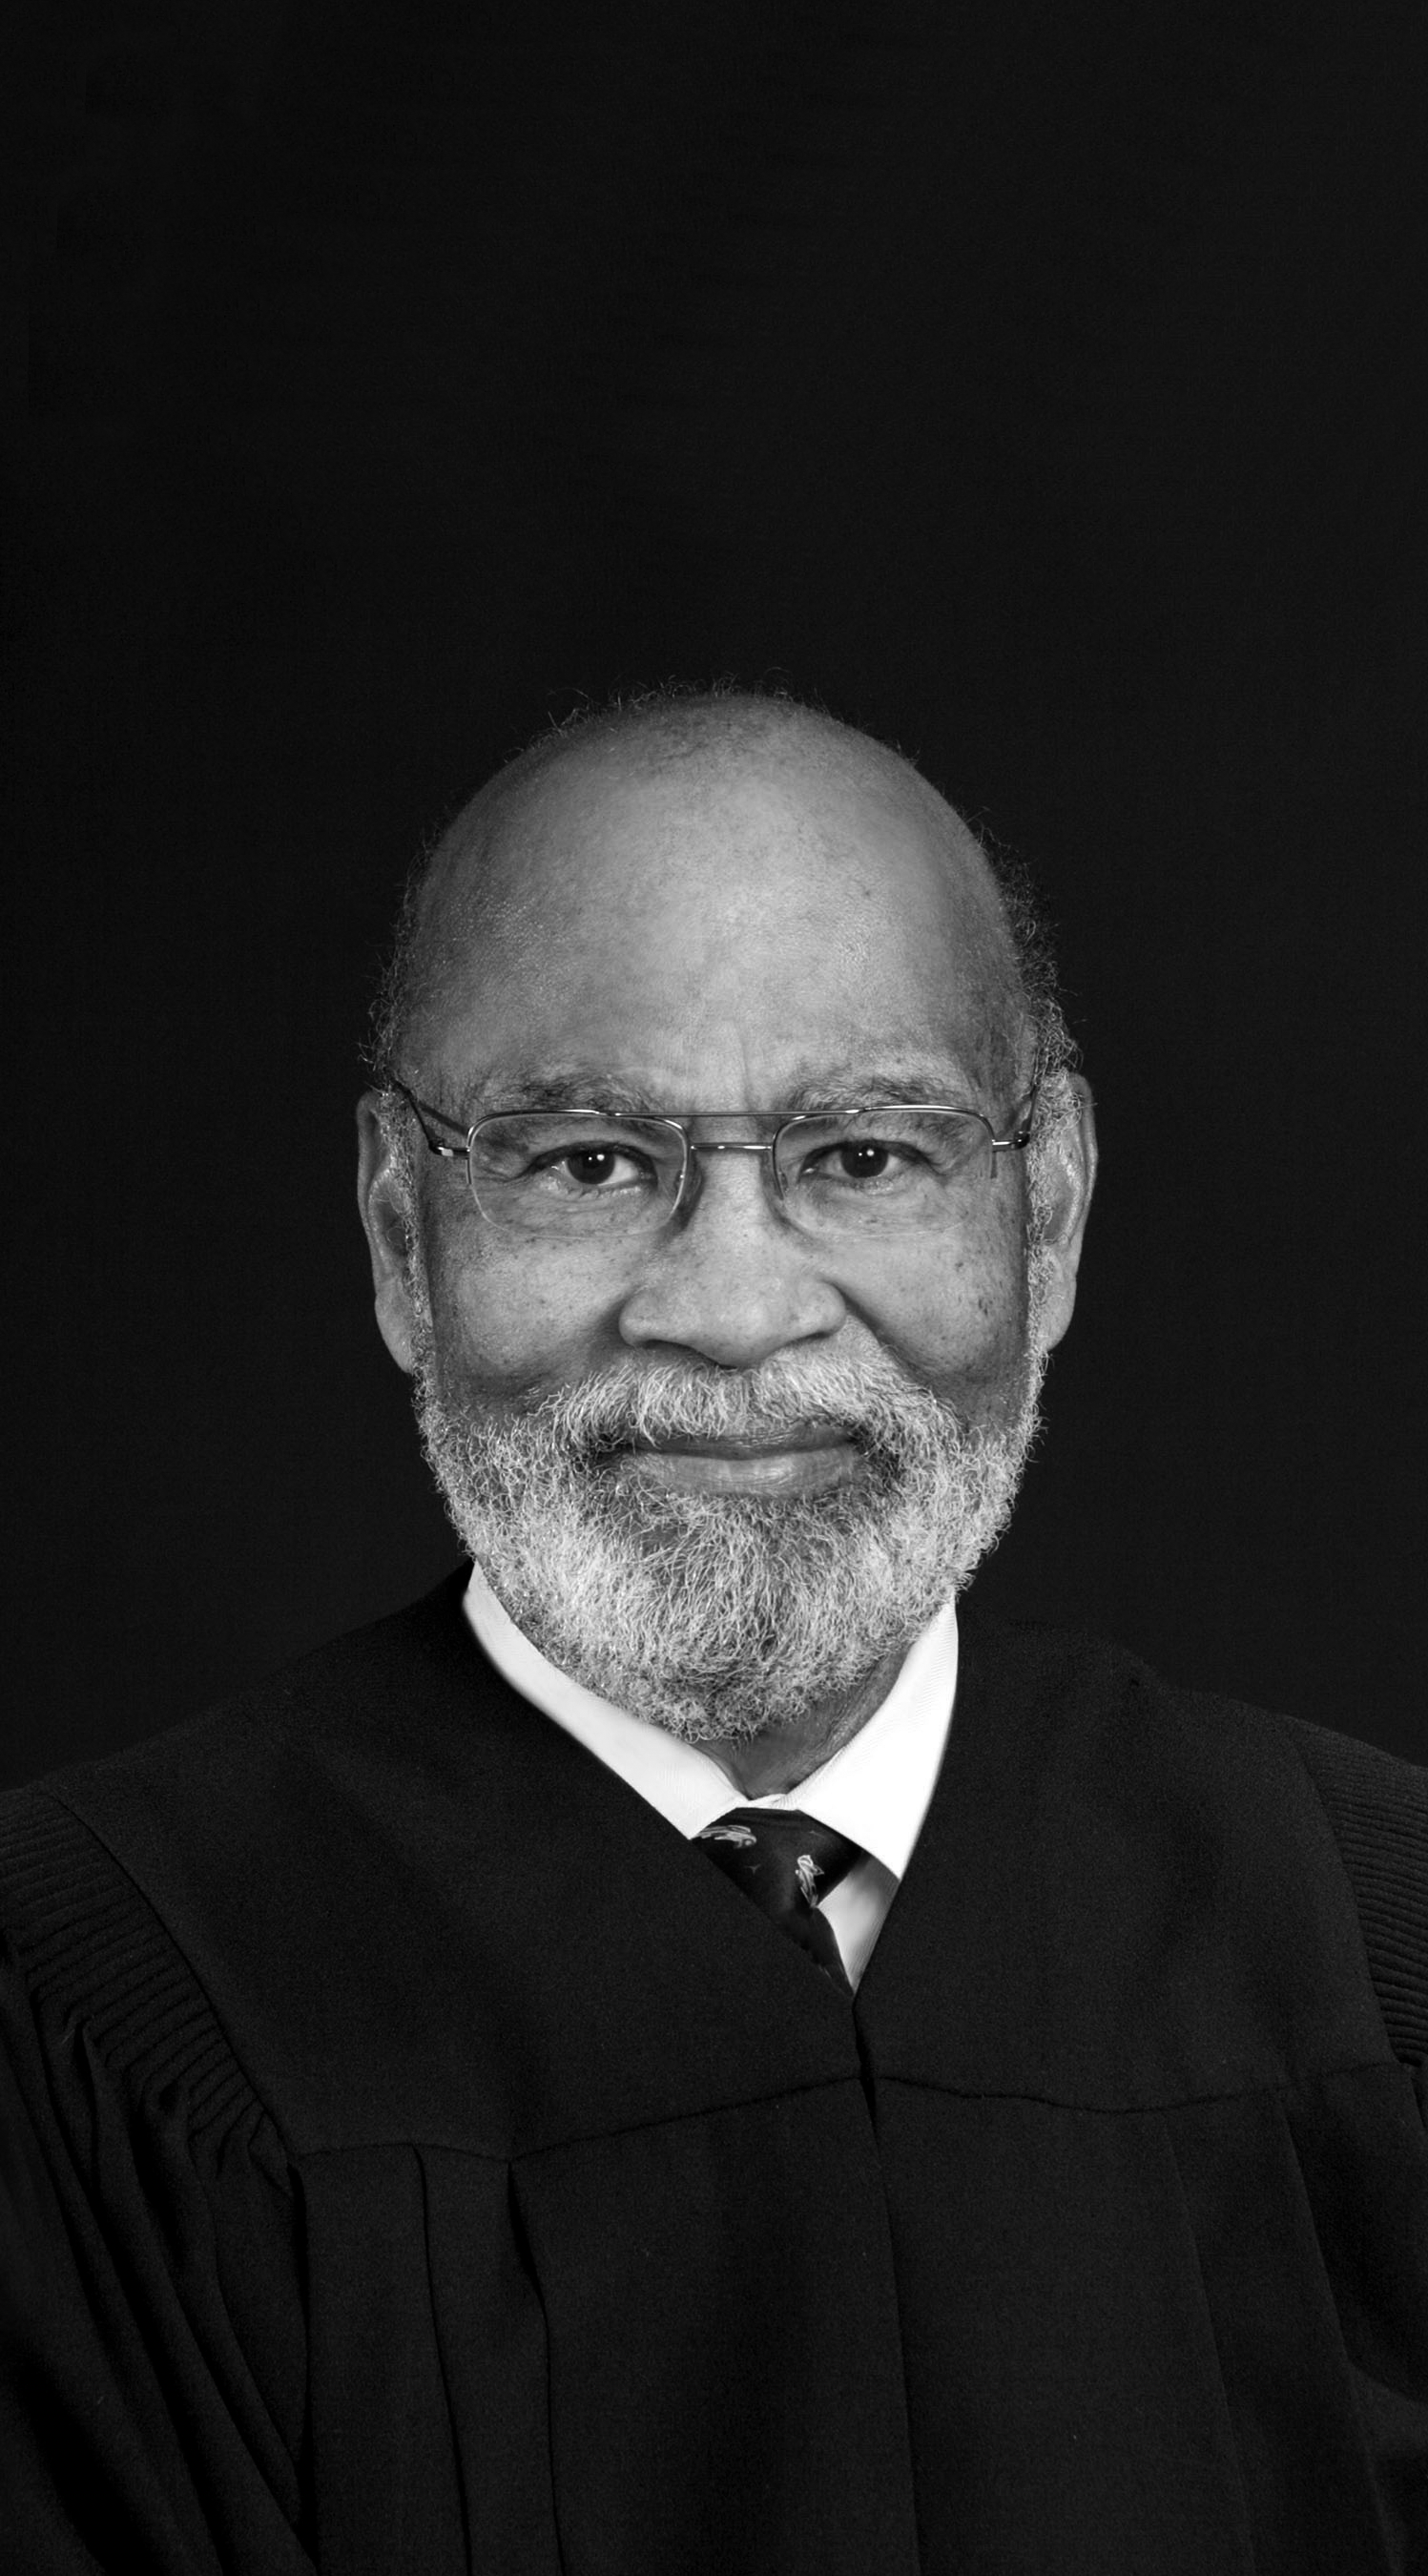 Headshot of Thelton E. Henderson wearing judicial robes.